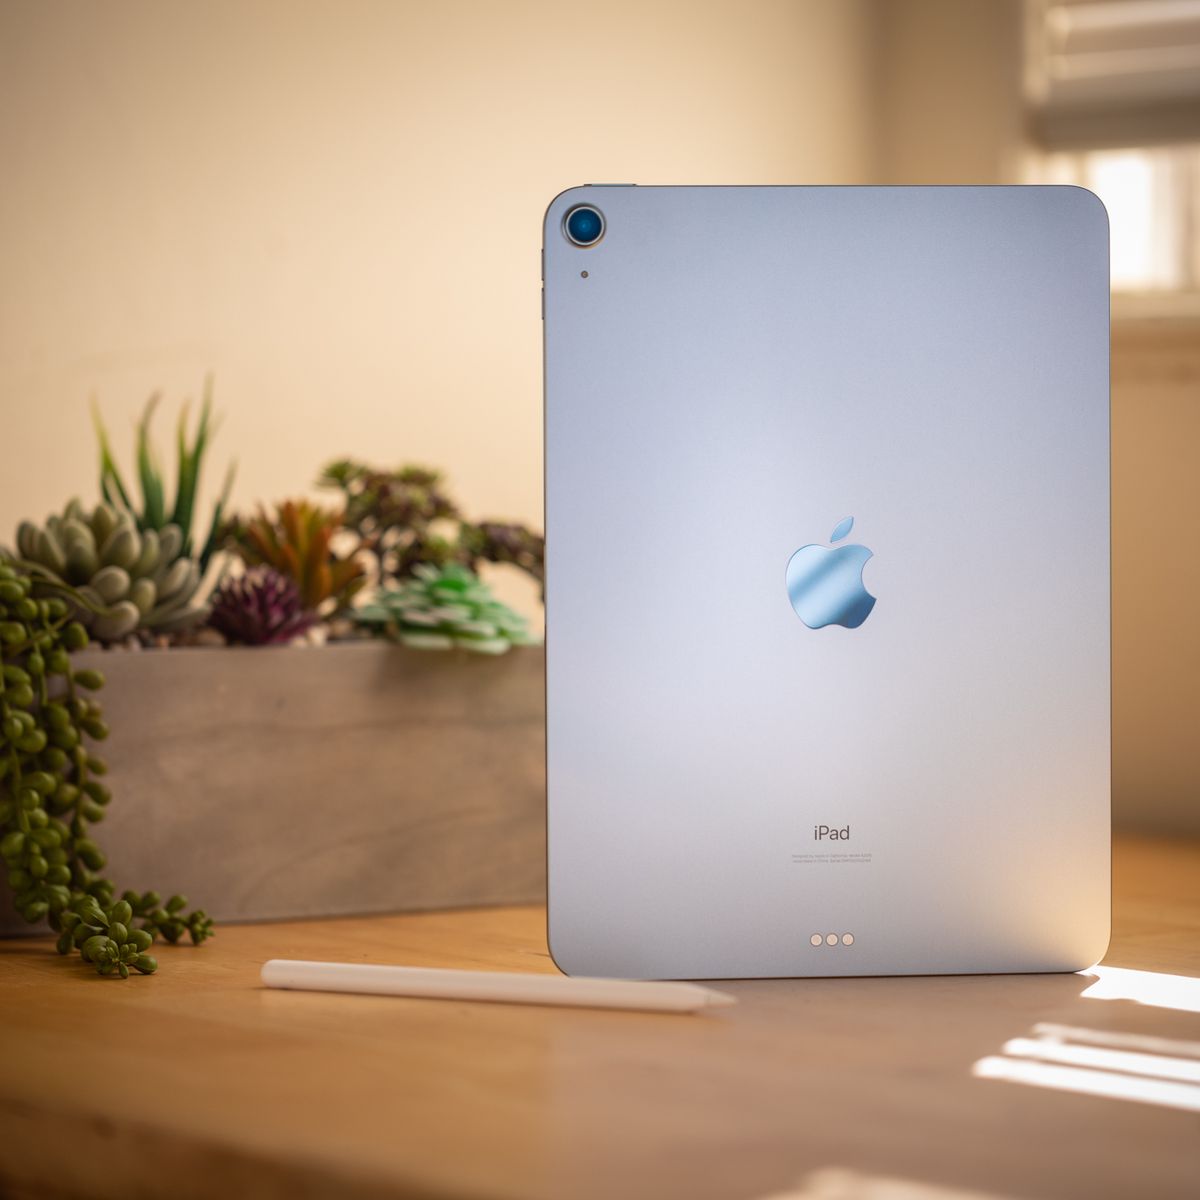 The iPad Air 2020 in blue